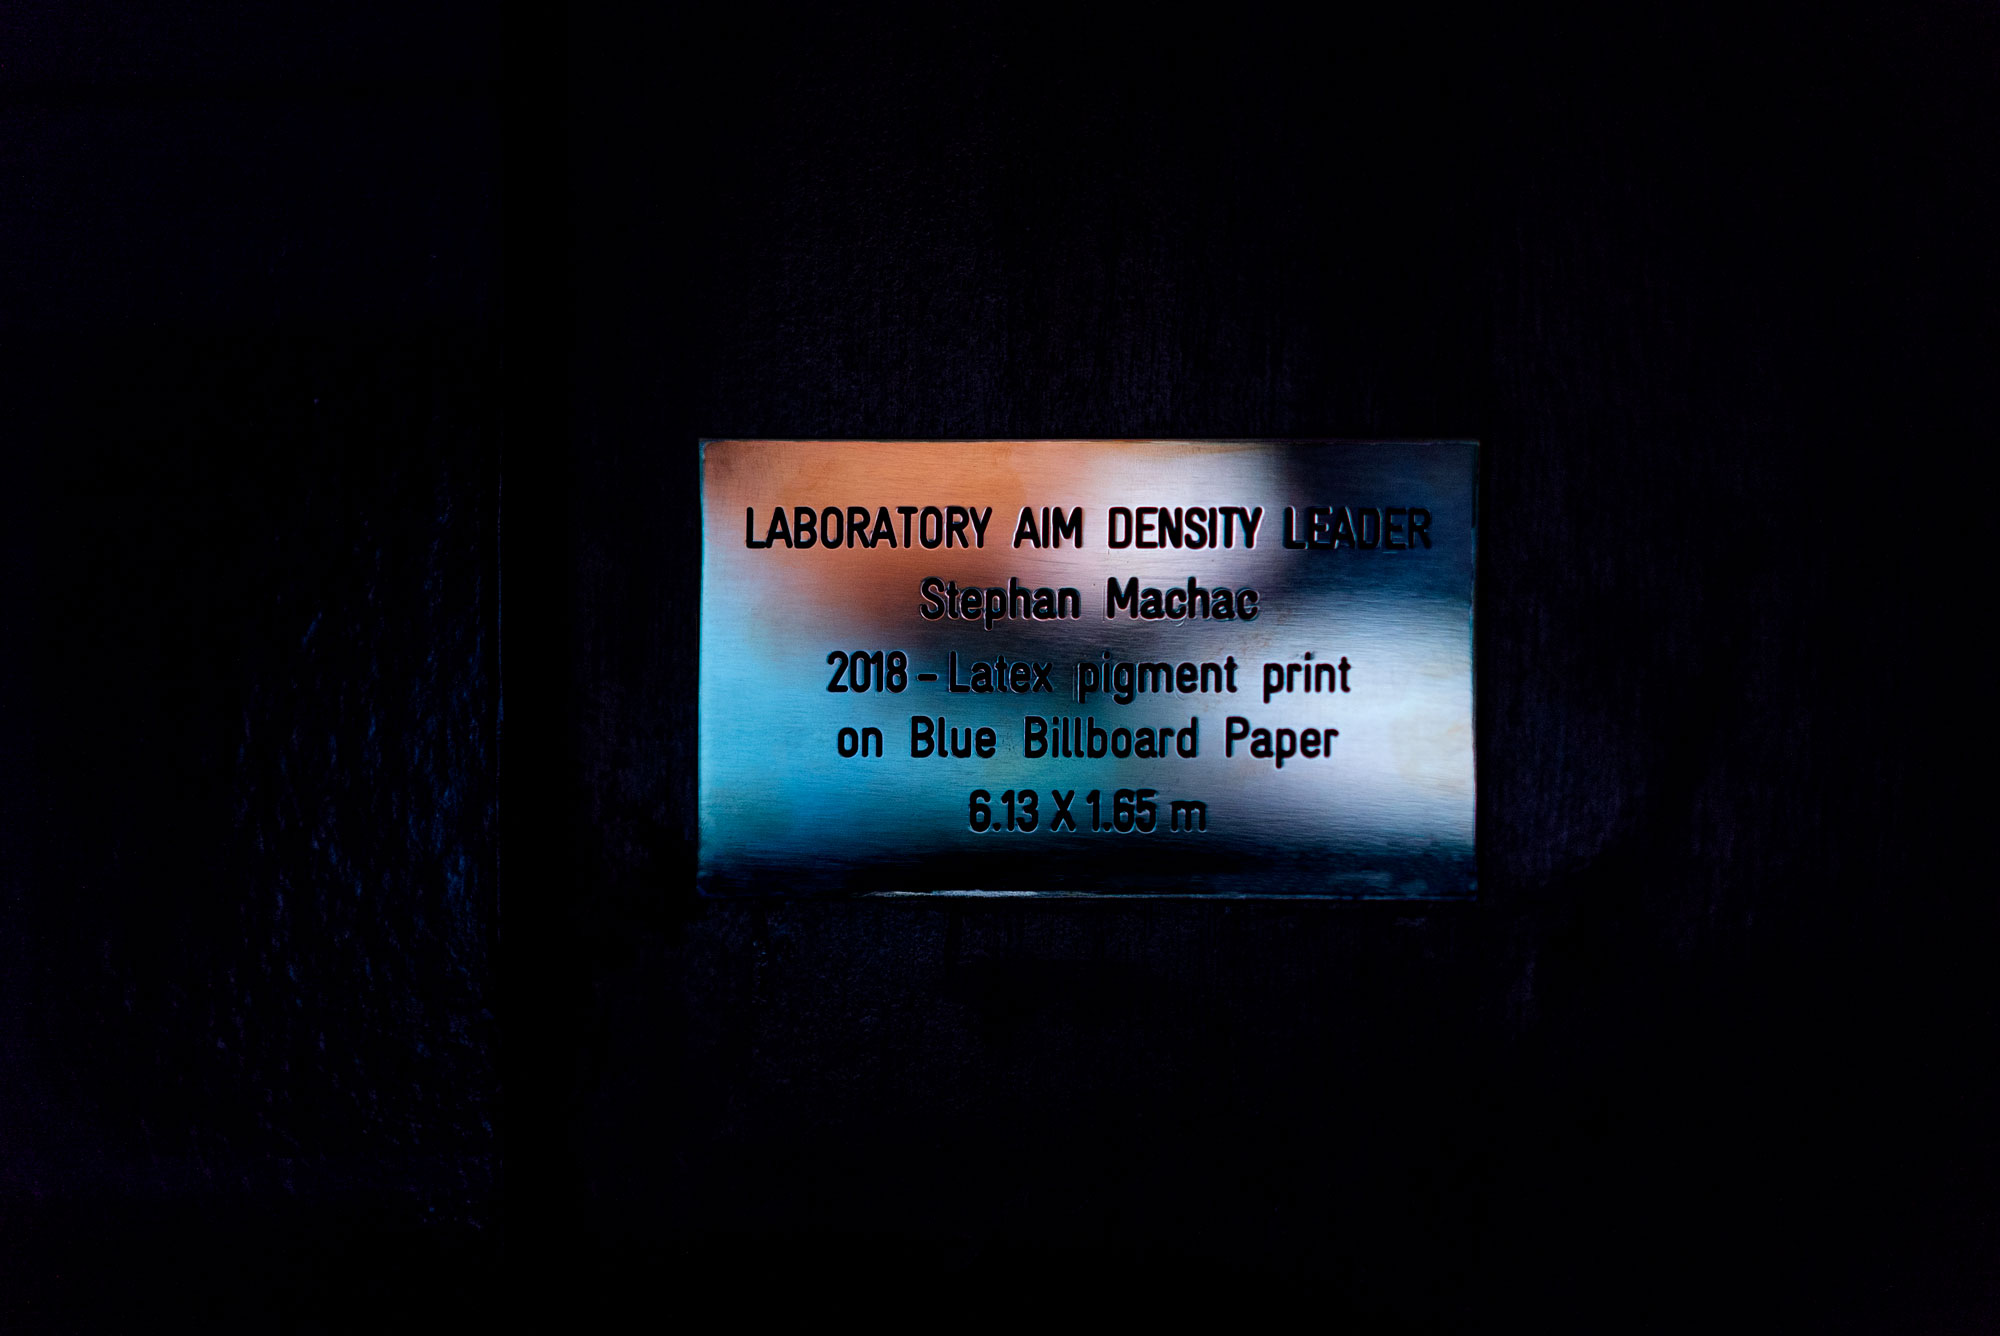 Stephan Machac LABORATORY AIM DENSITY LEADER 2020 LABORATORY AIM DENSITY LEADER - Infoschild - Installation view BAMBI Filmstudio - 2020